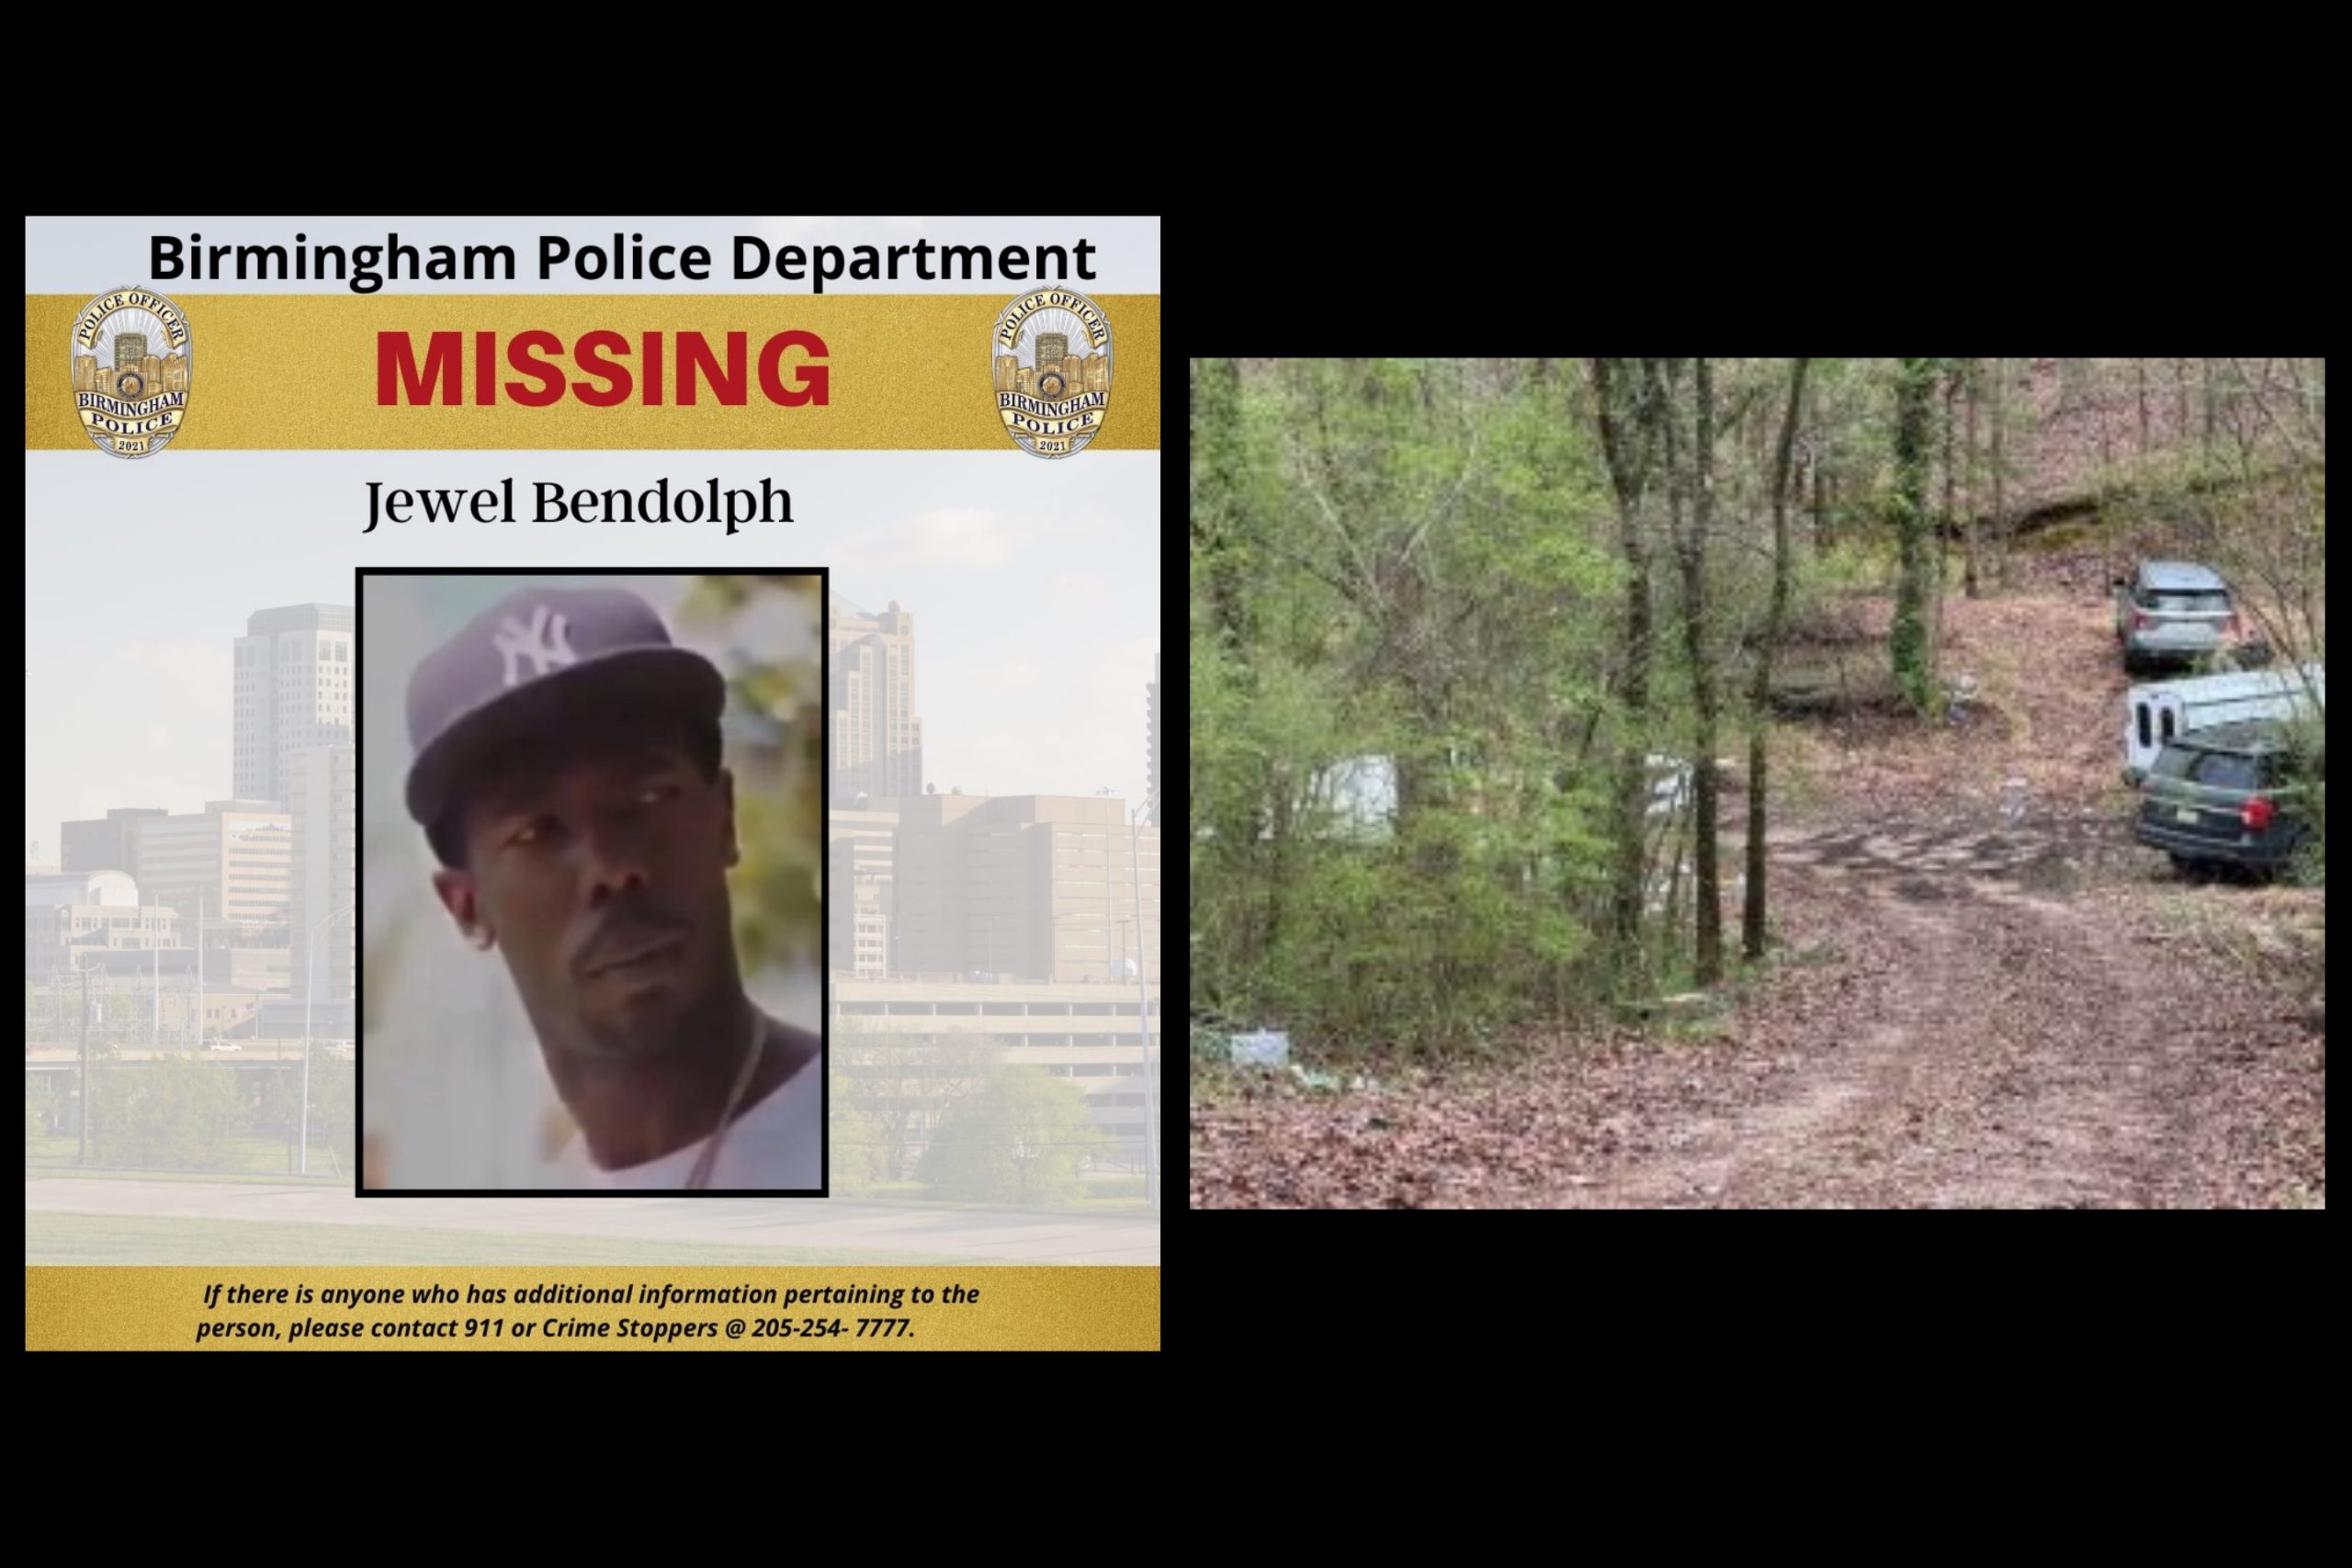 UPDATED: Body found near Pinson identified as missing Birmingham man